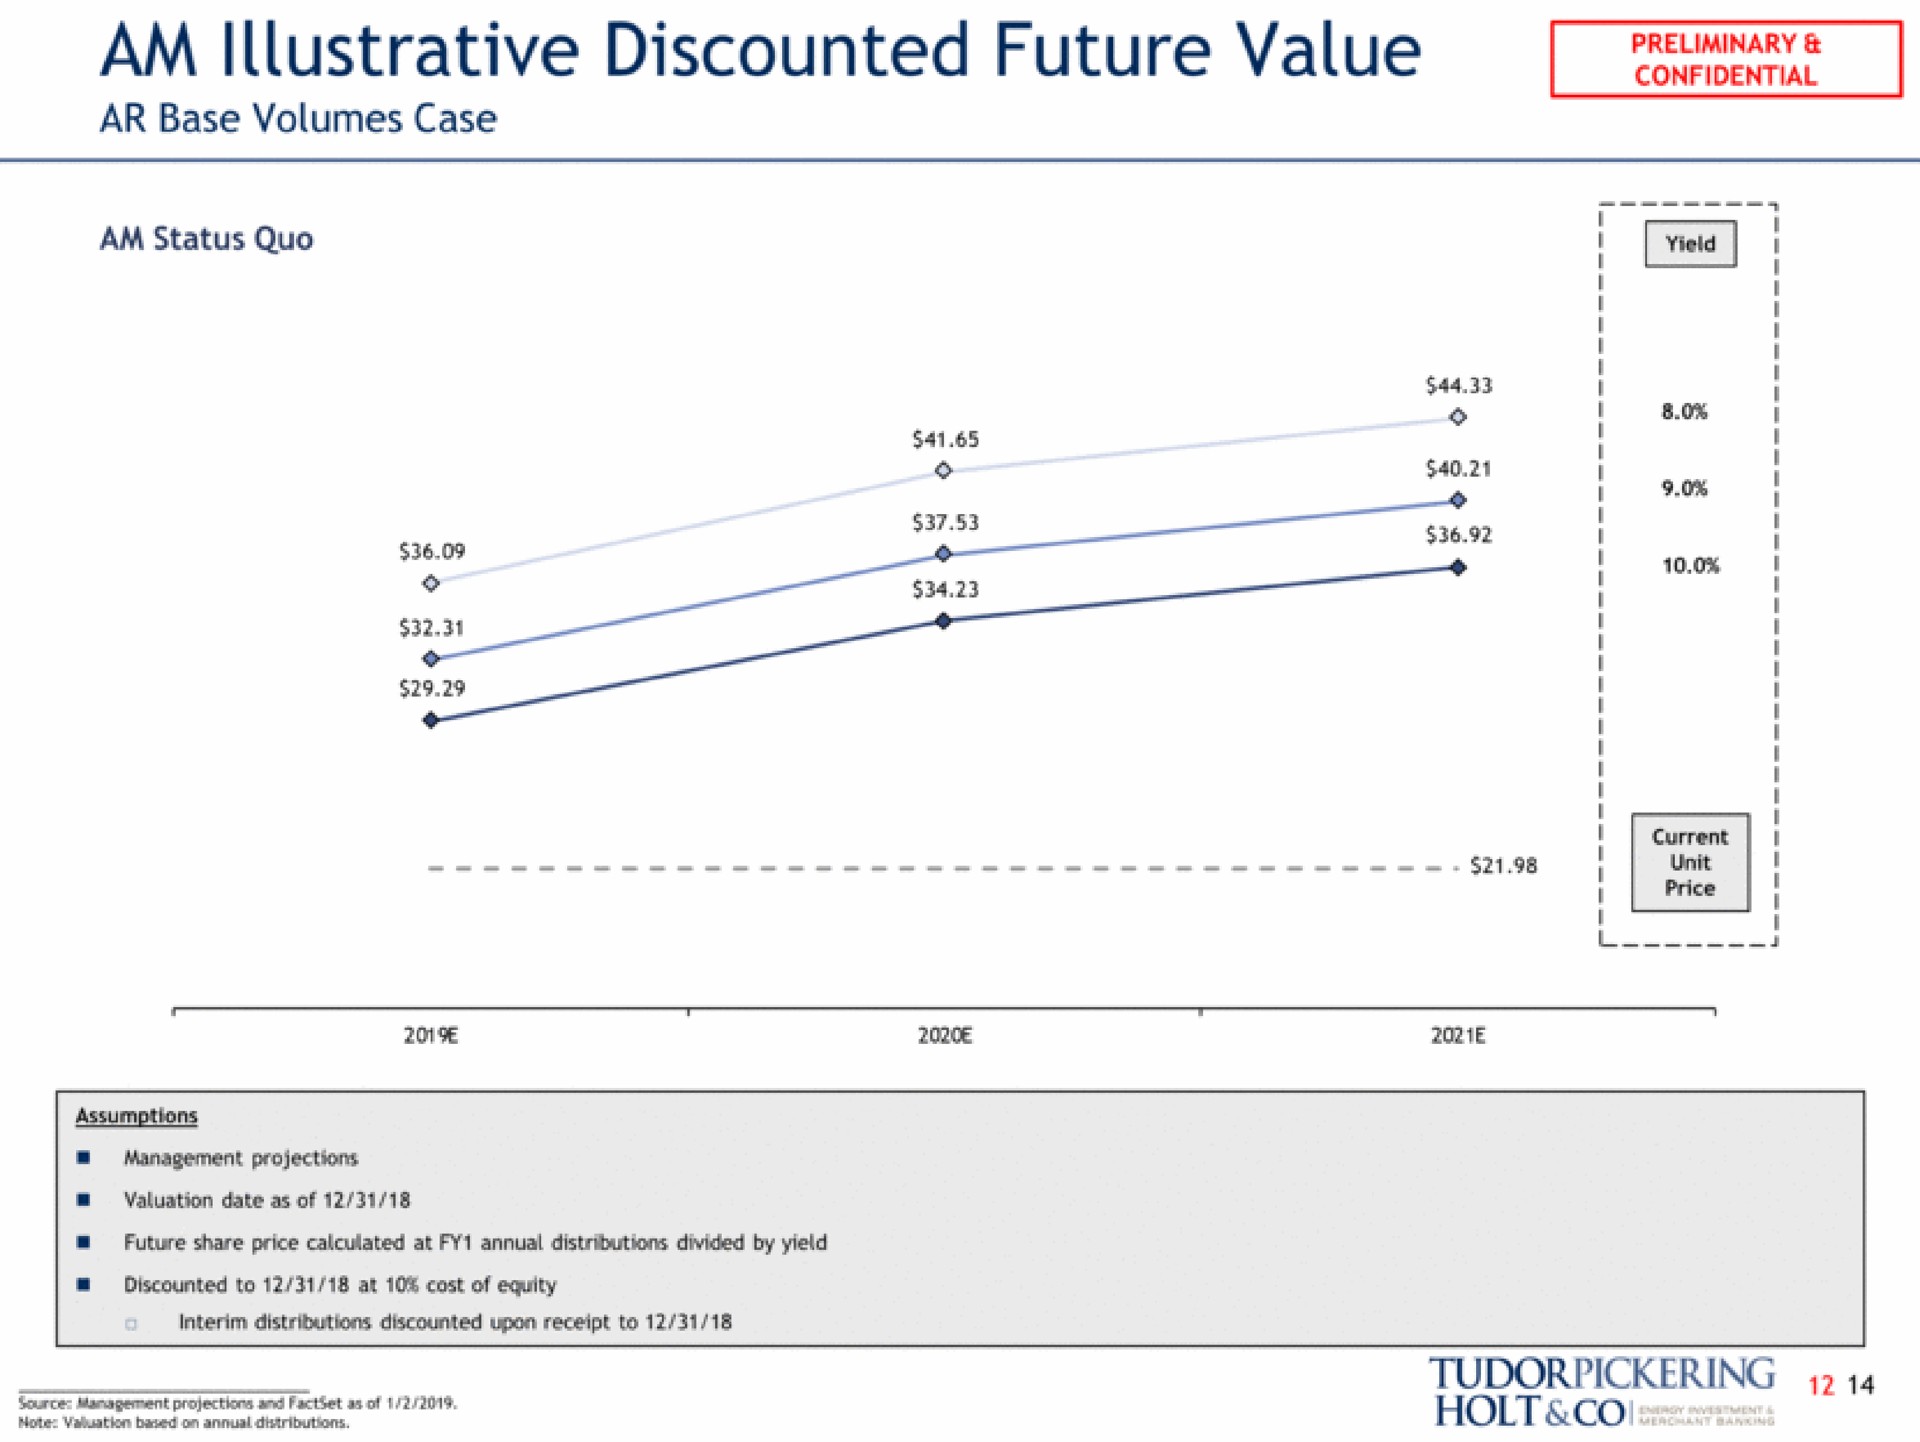 am illustrative discounted future value | Tudor, Pickering, Holt & Co